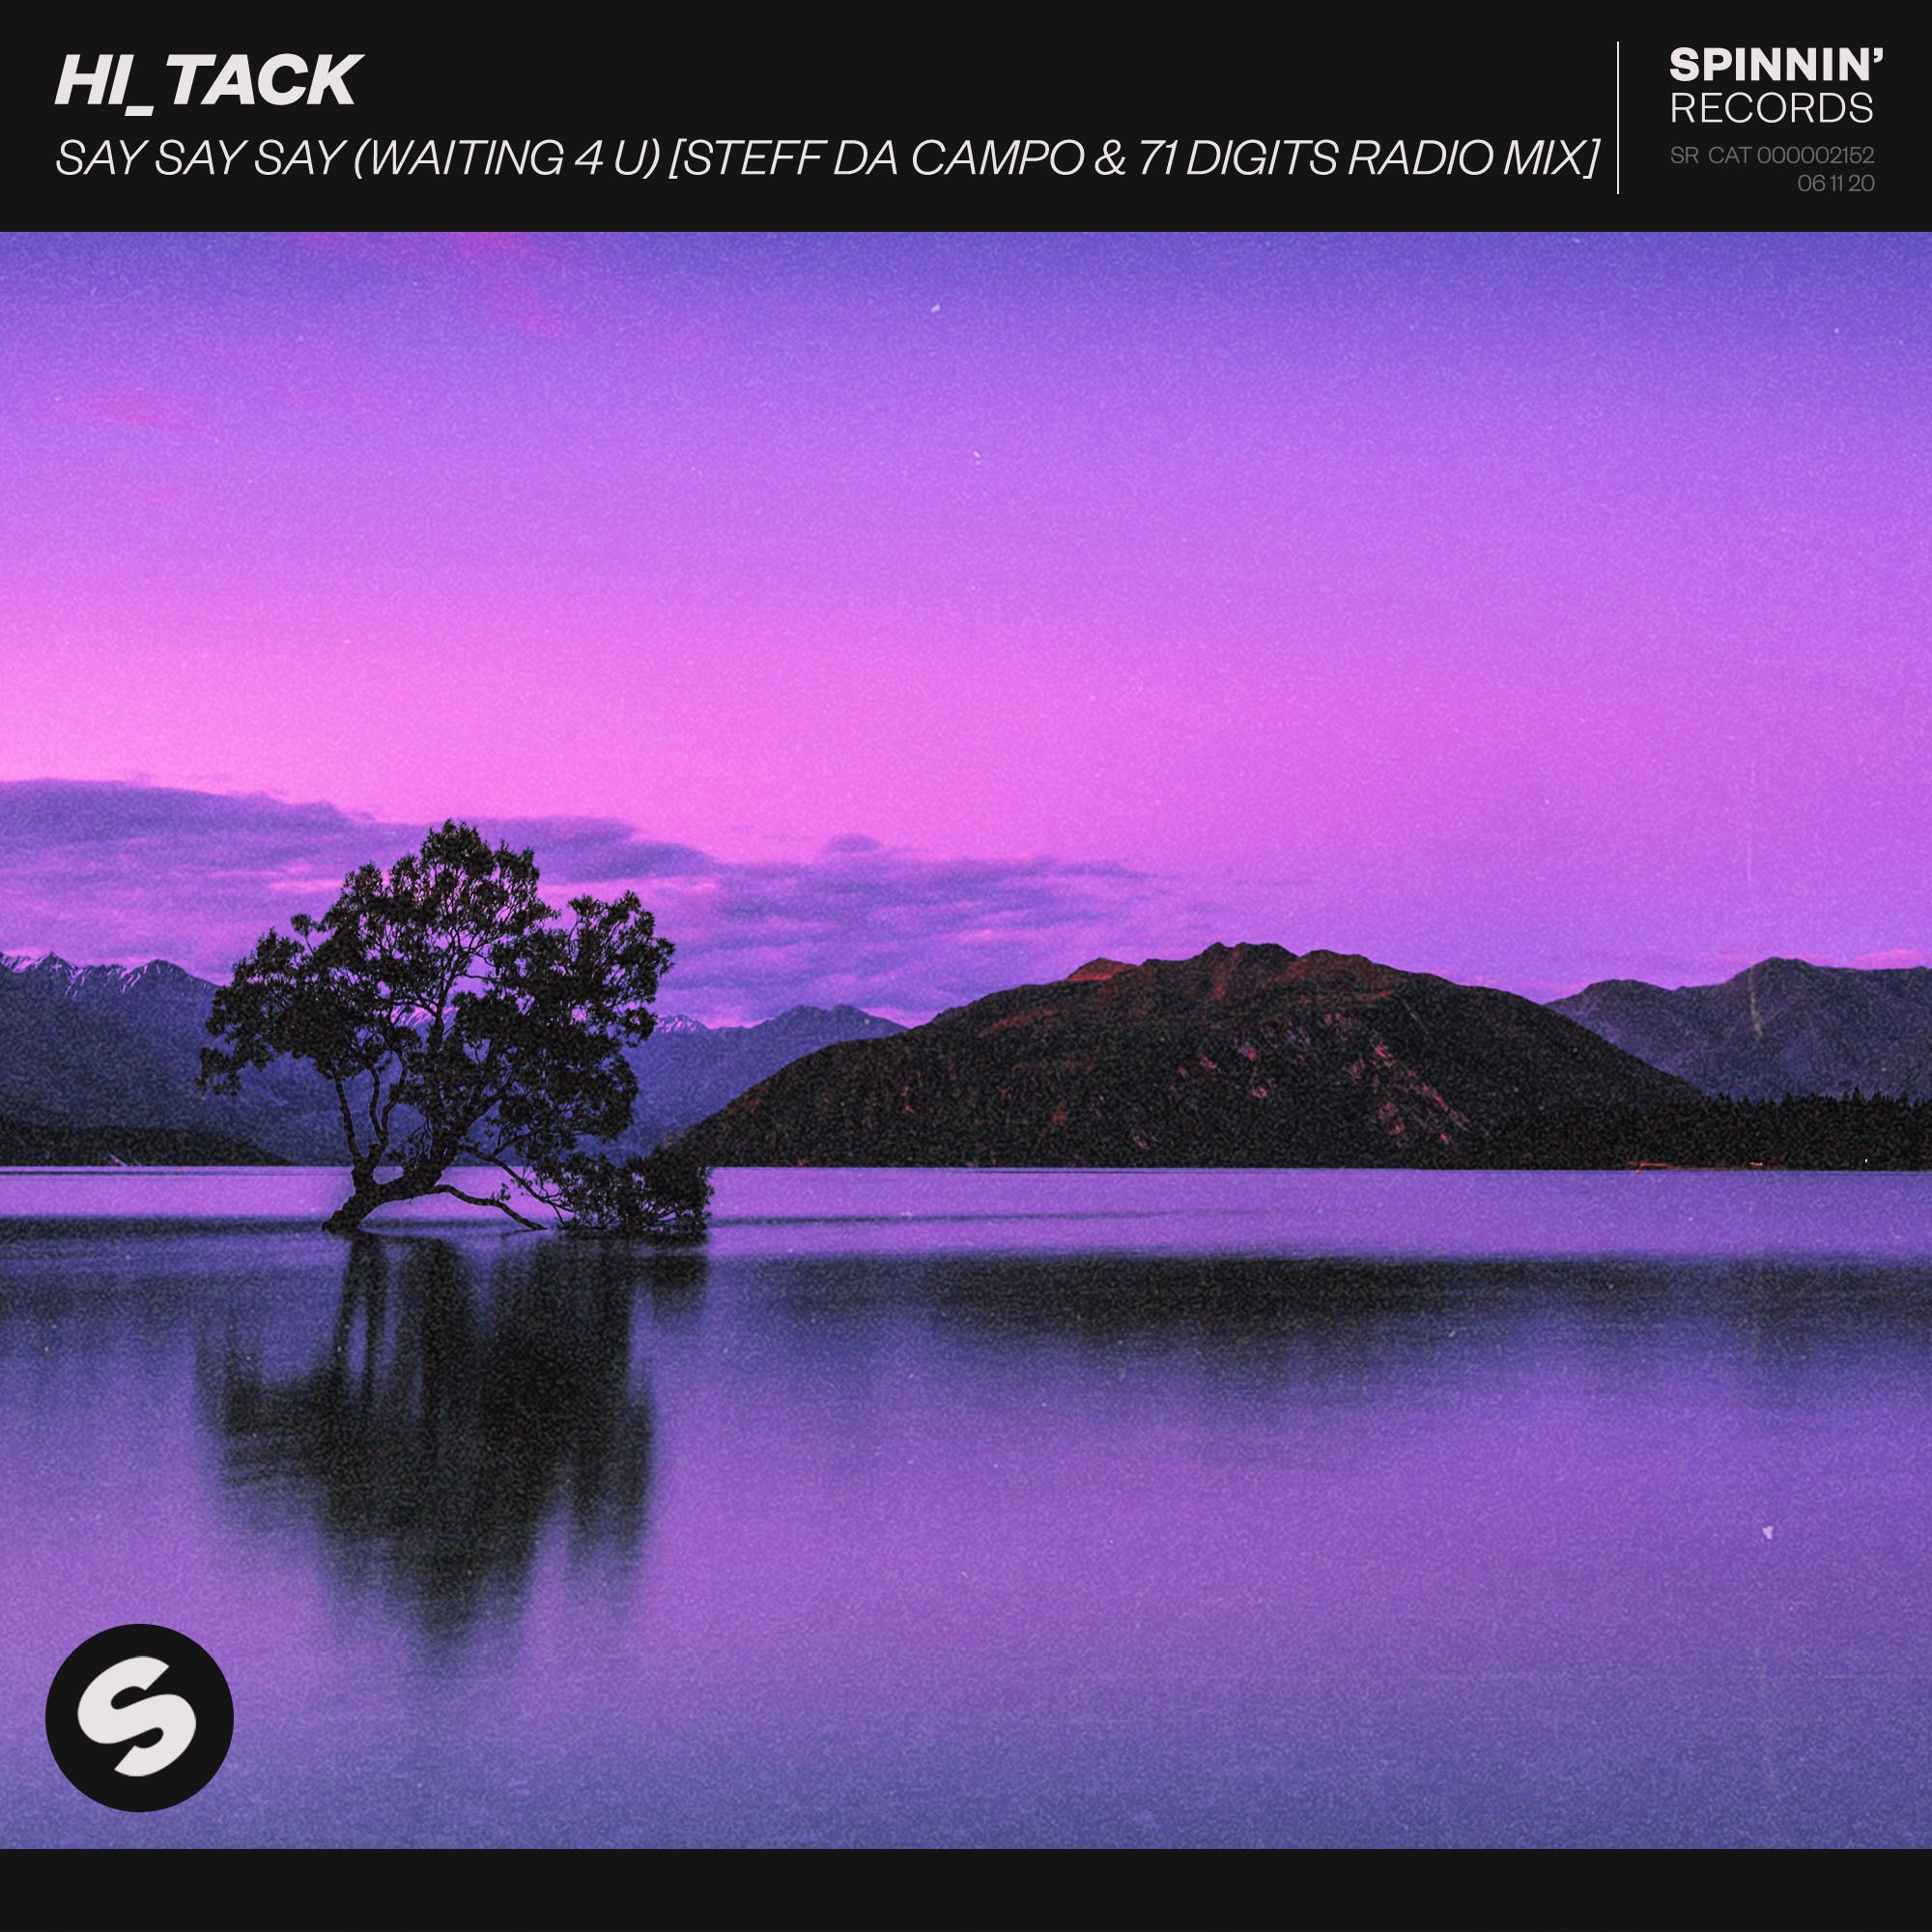 Hi_Tack - Say Say Say (Waiting 4 U) [Steff da Campo & 71 Digits Radio Mix] - Single